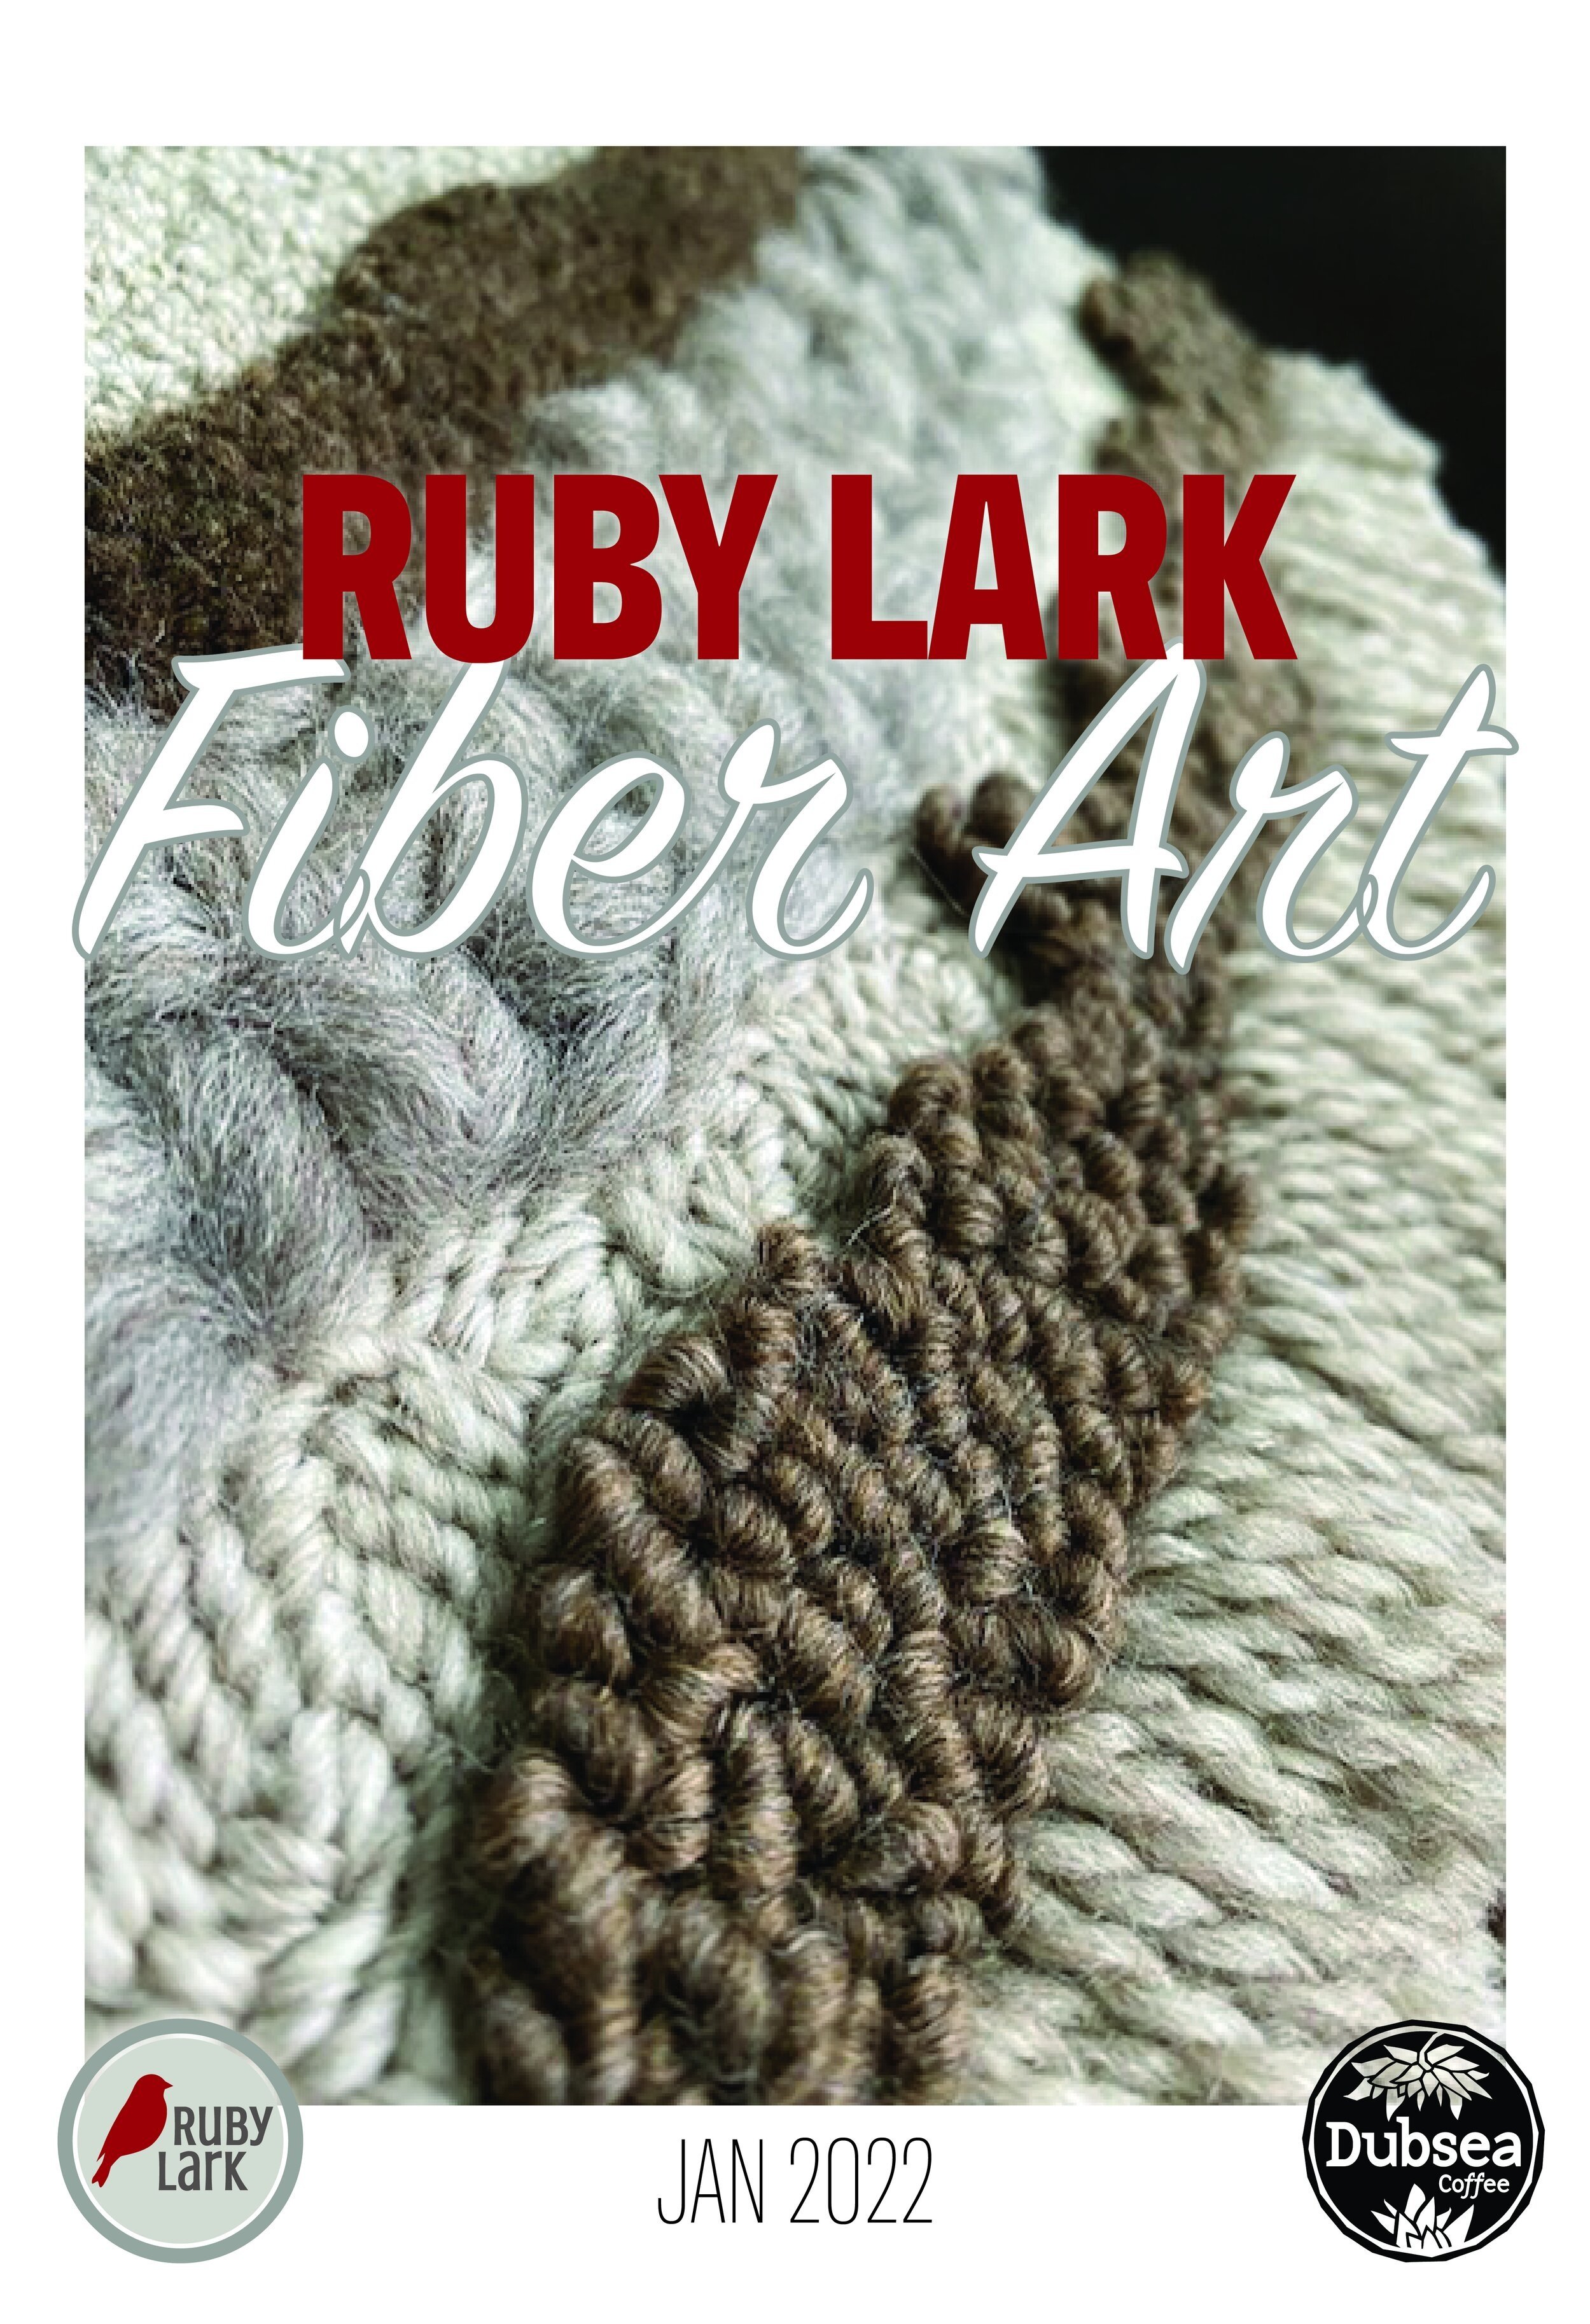 Ruby Lark Fiber Arts